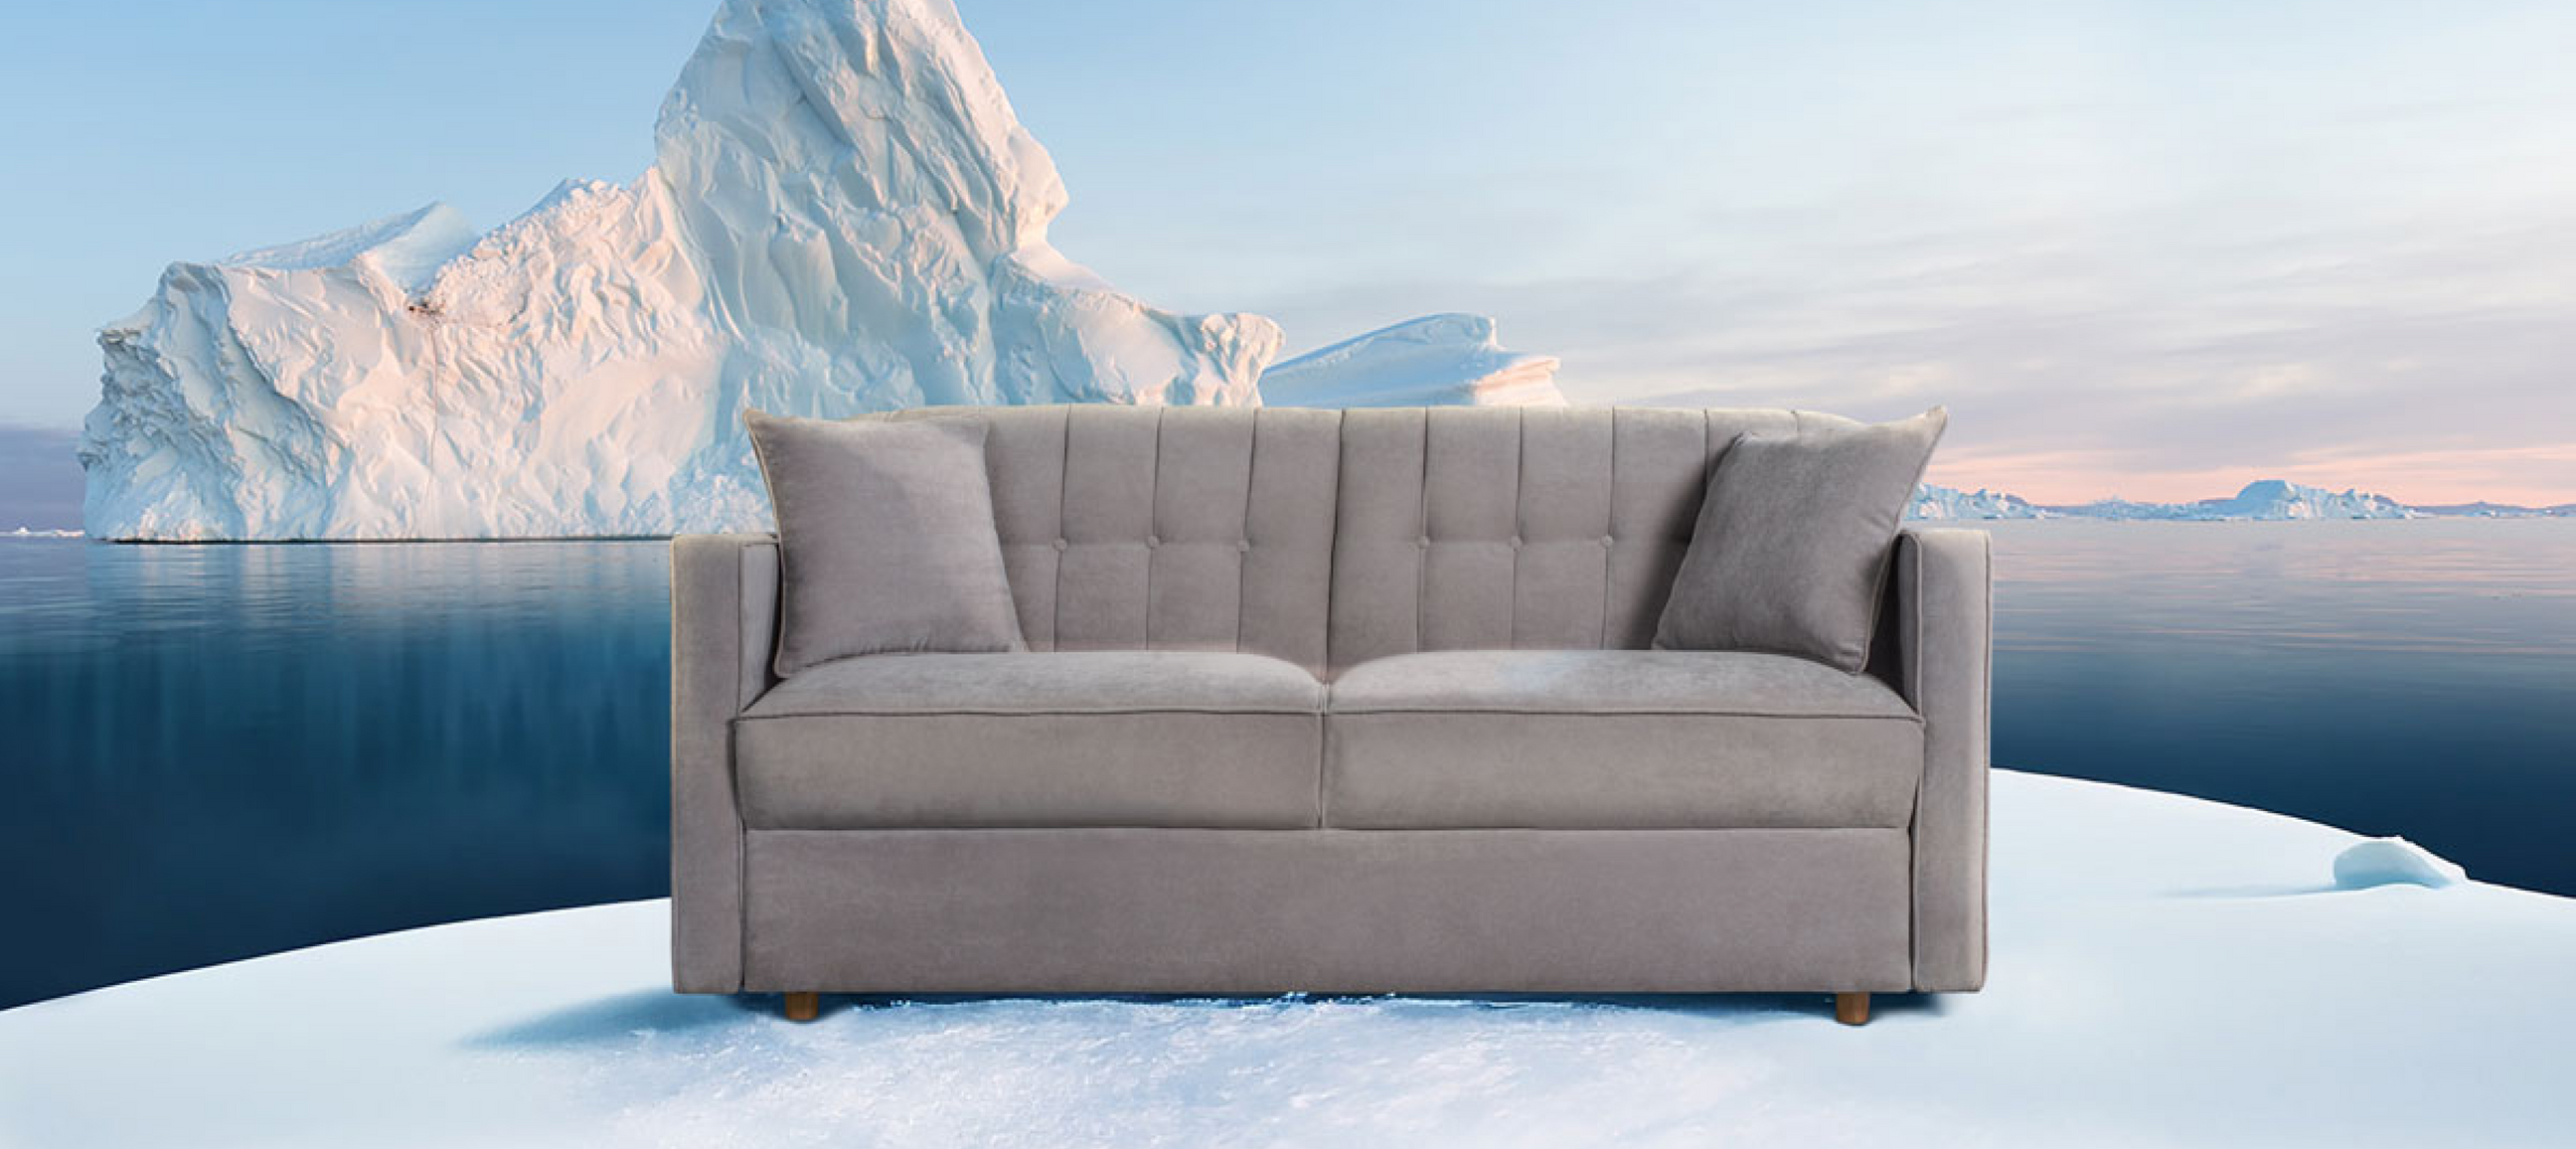 Gray Two-seated Sofa from makora brand